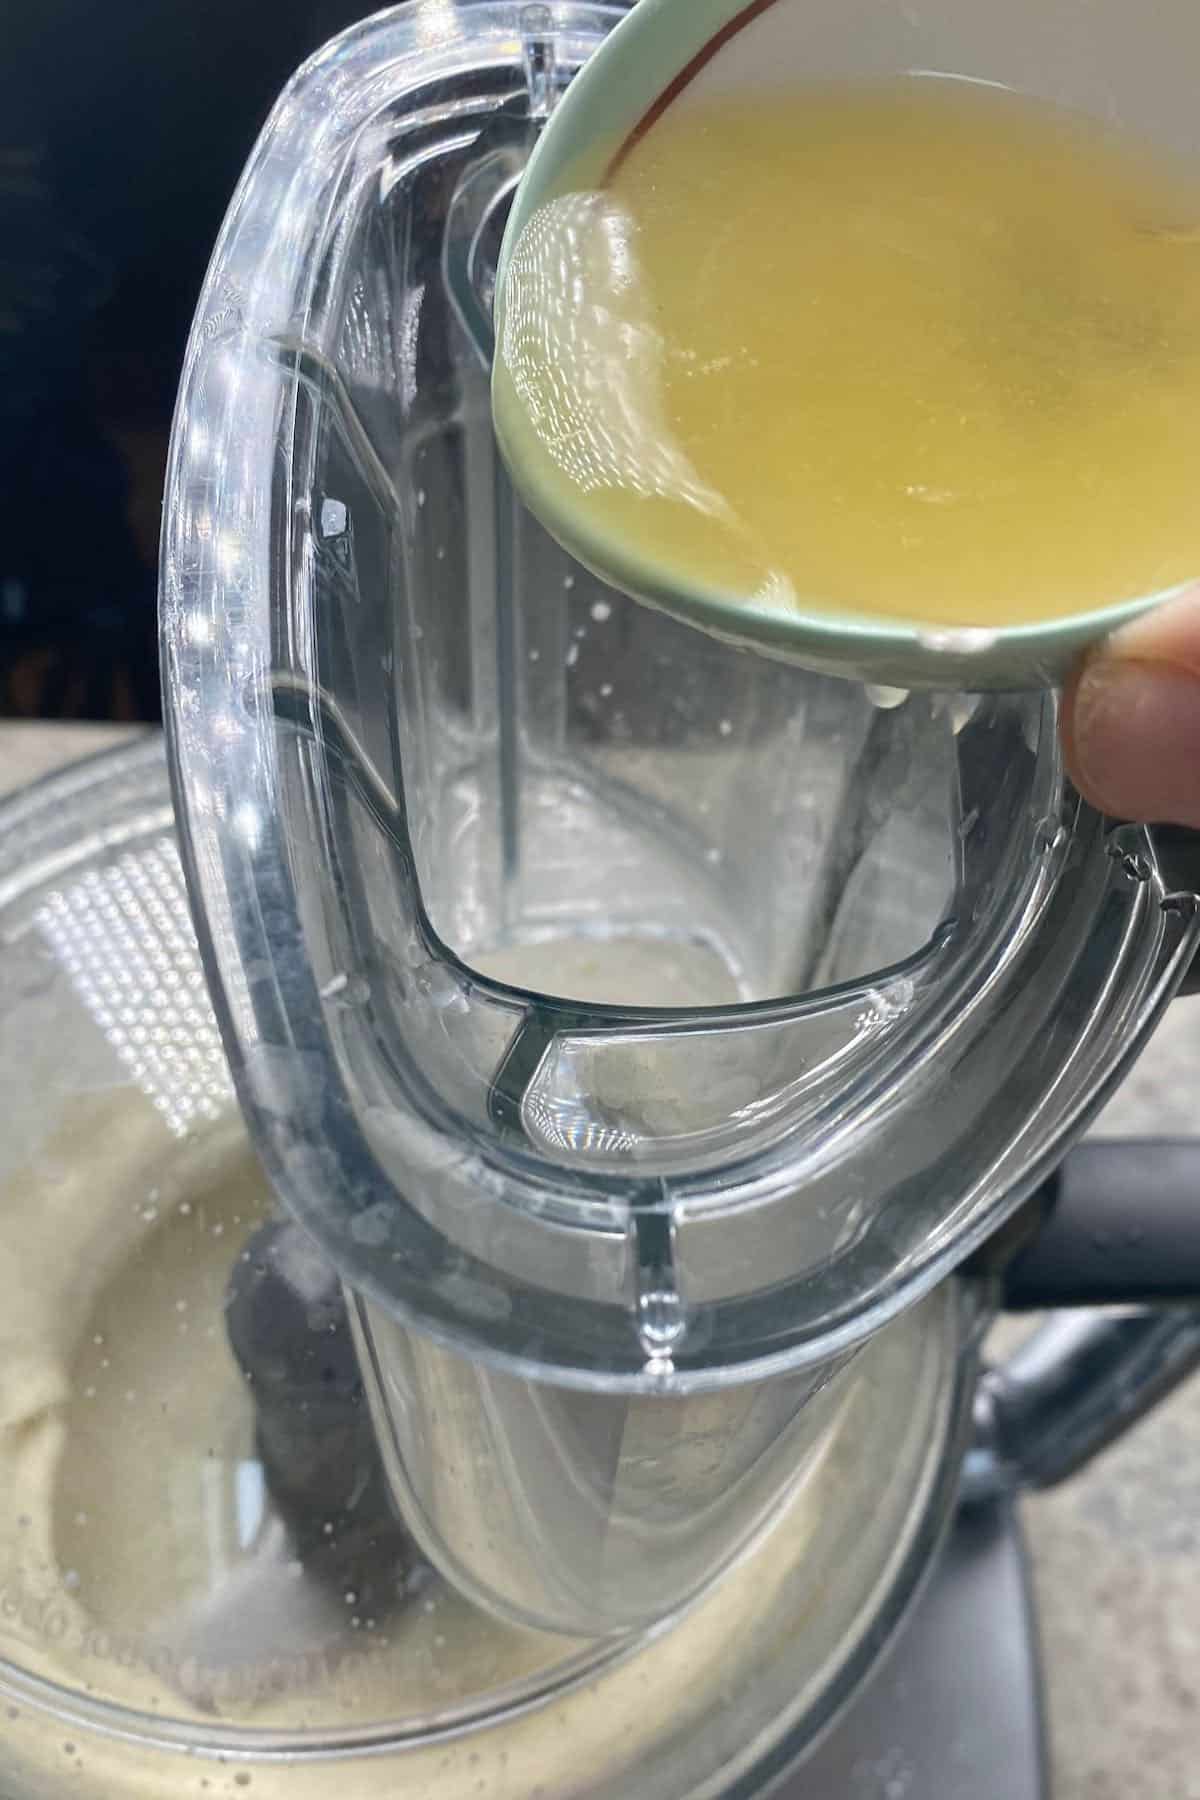 Adding lemon juice to a food processor